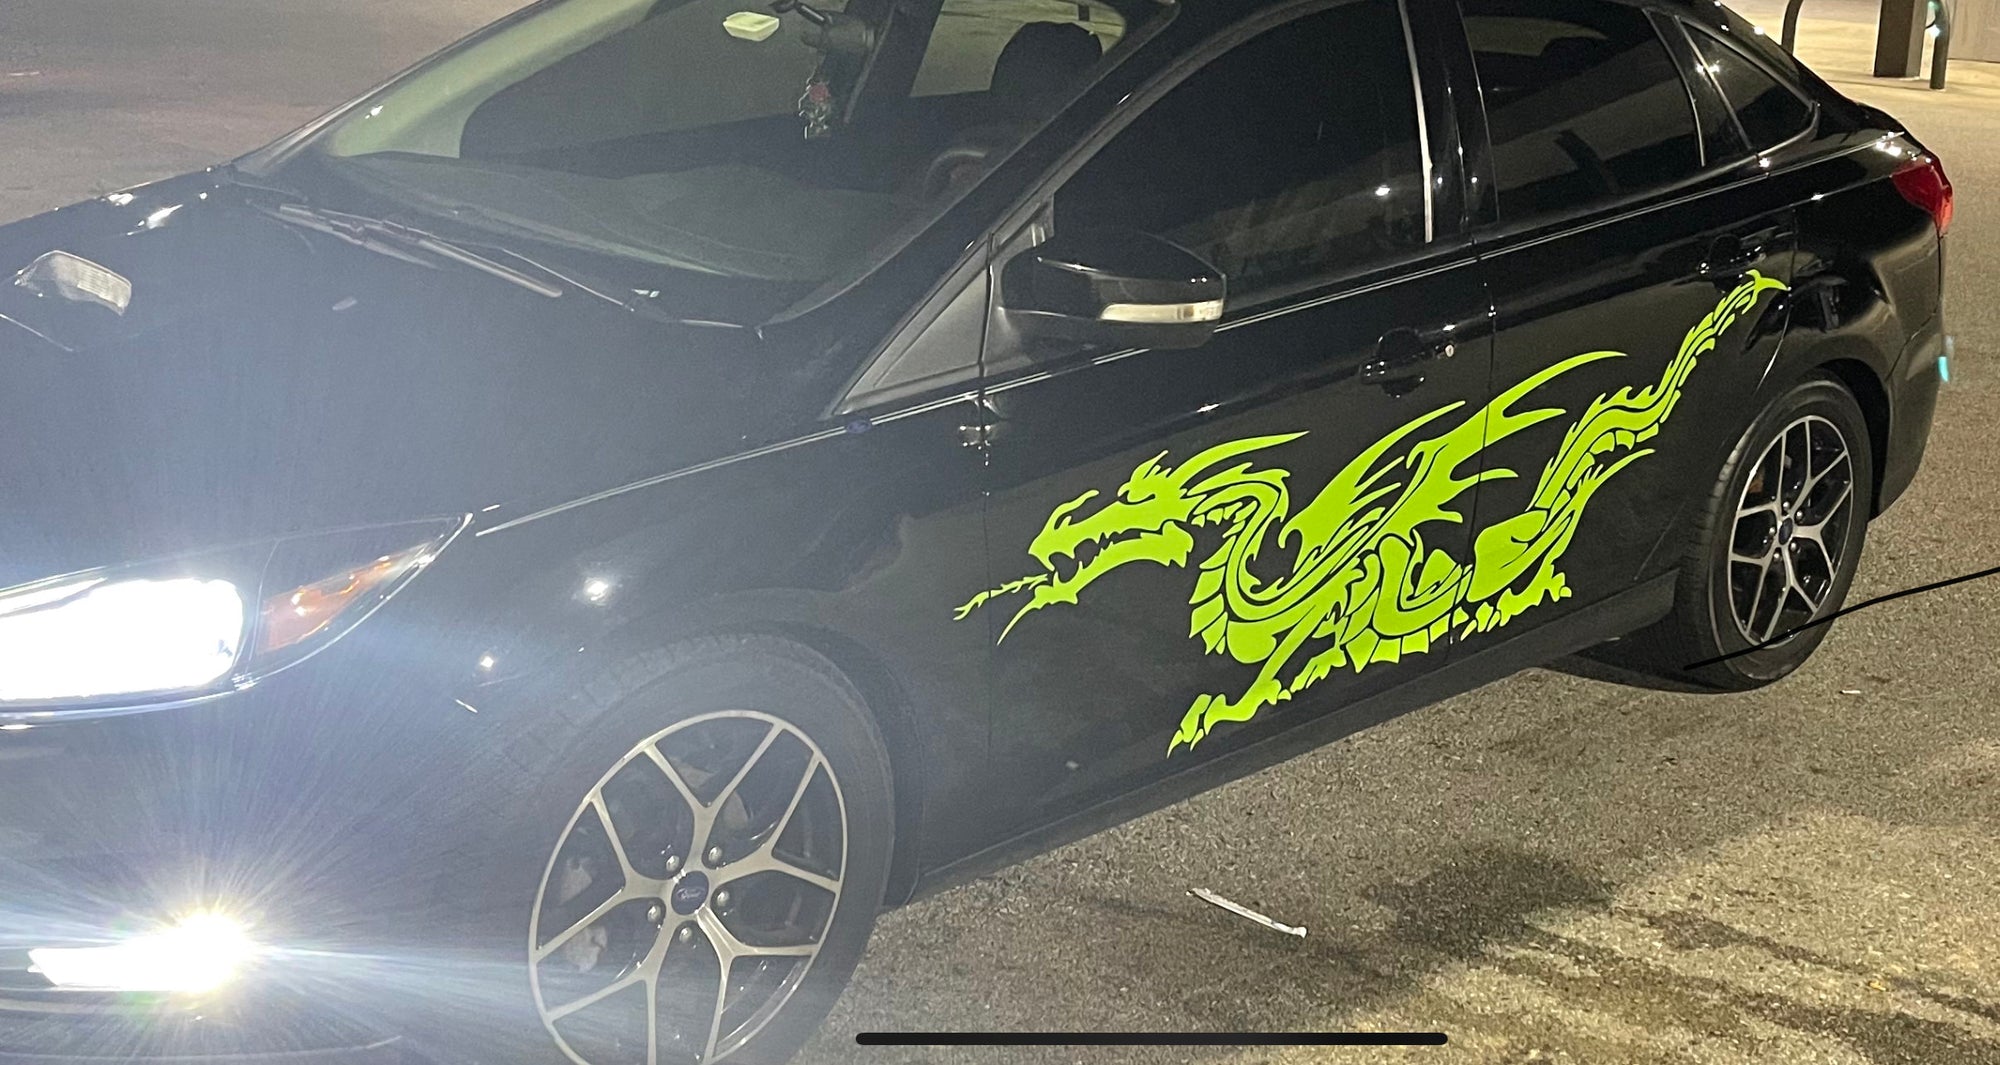 lime green dragon vinyl decal on black car